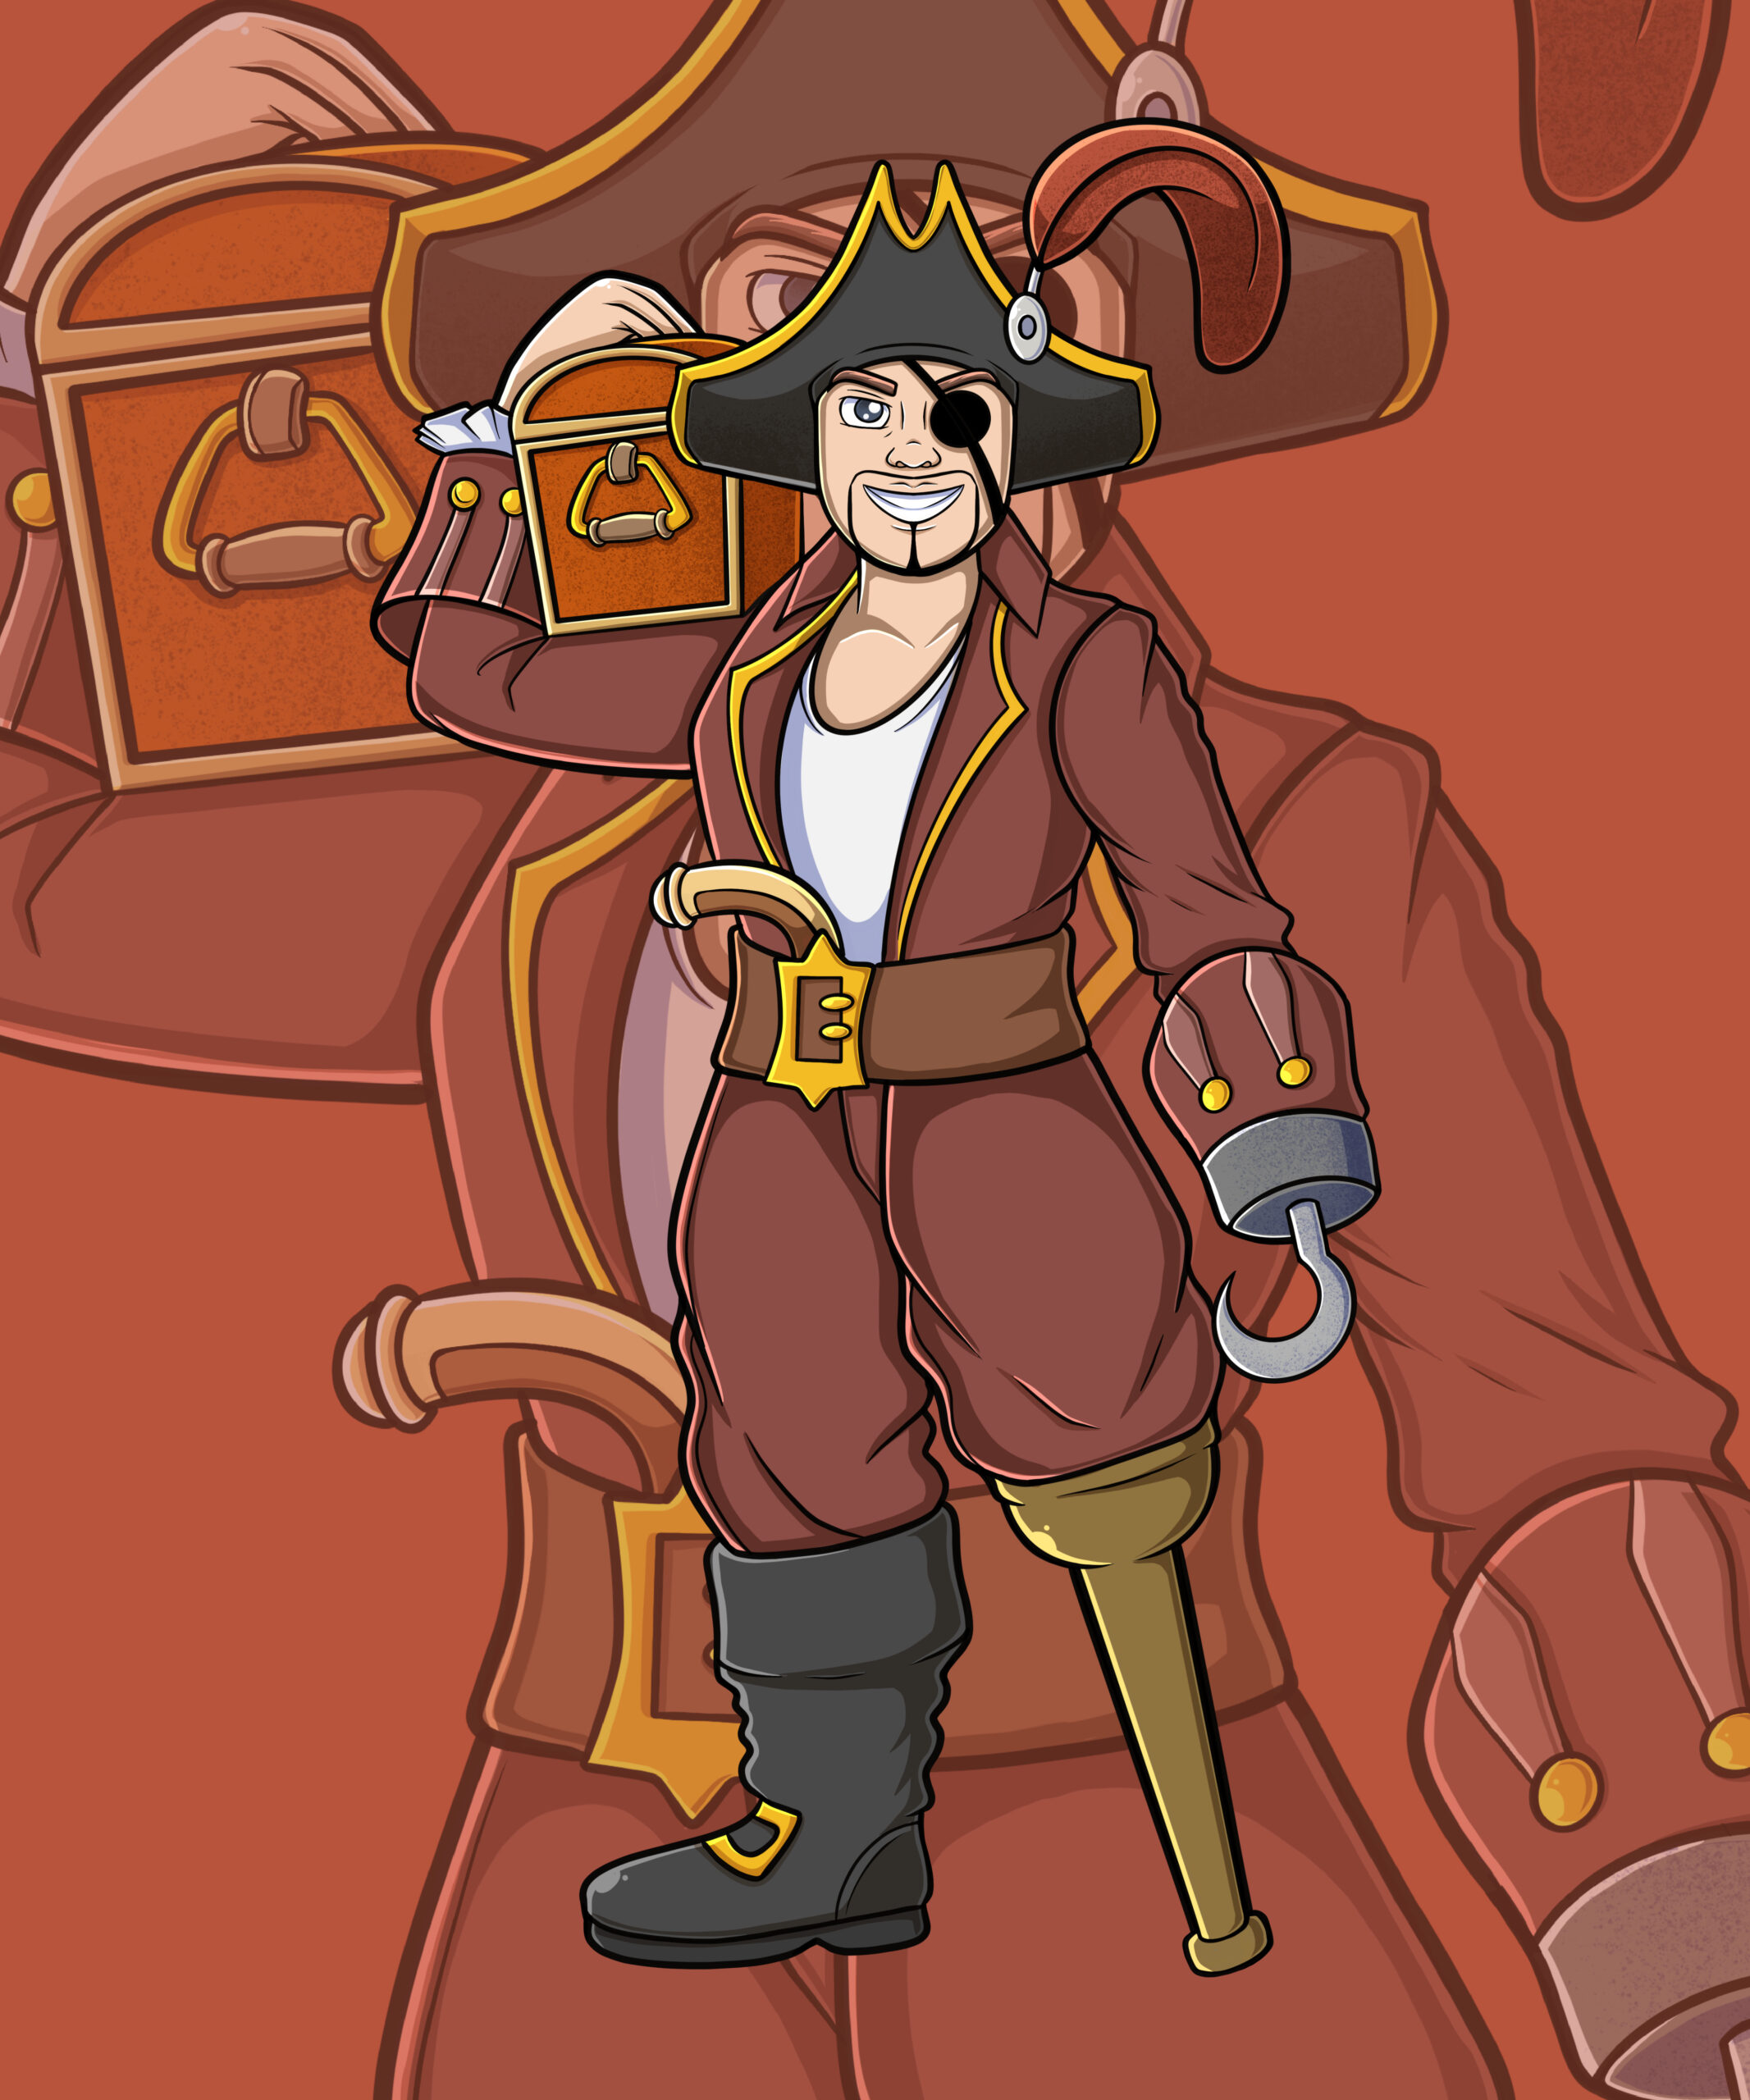 Pirates Cartoon & Mascot